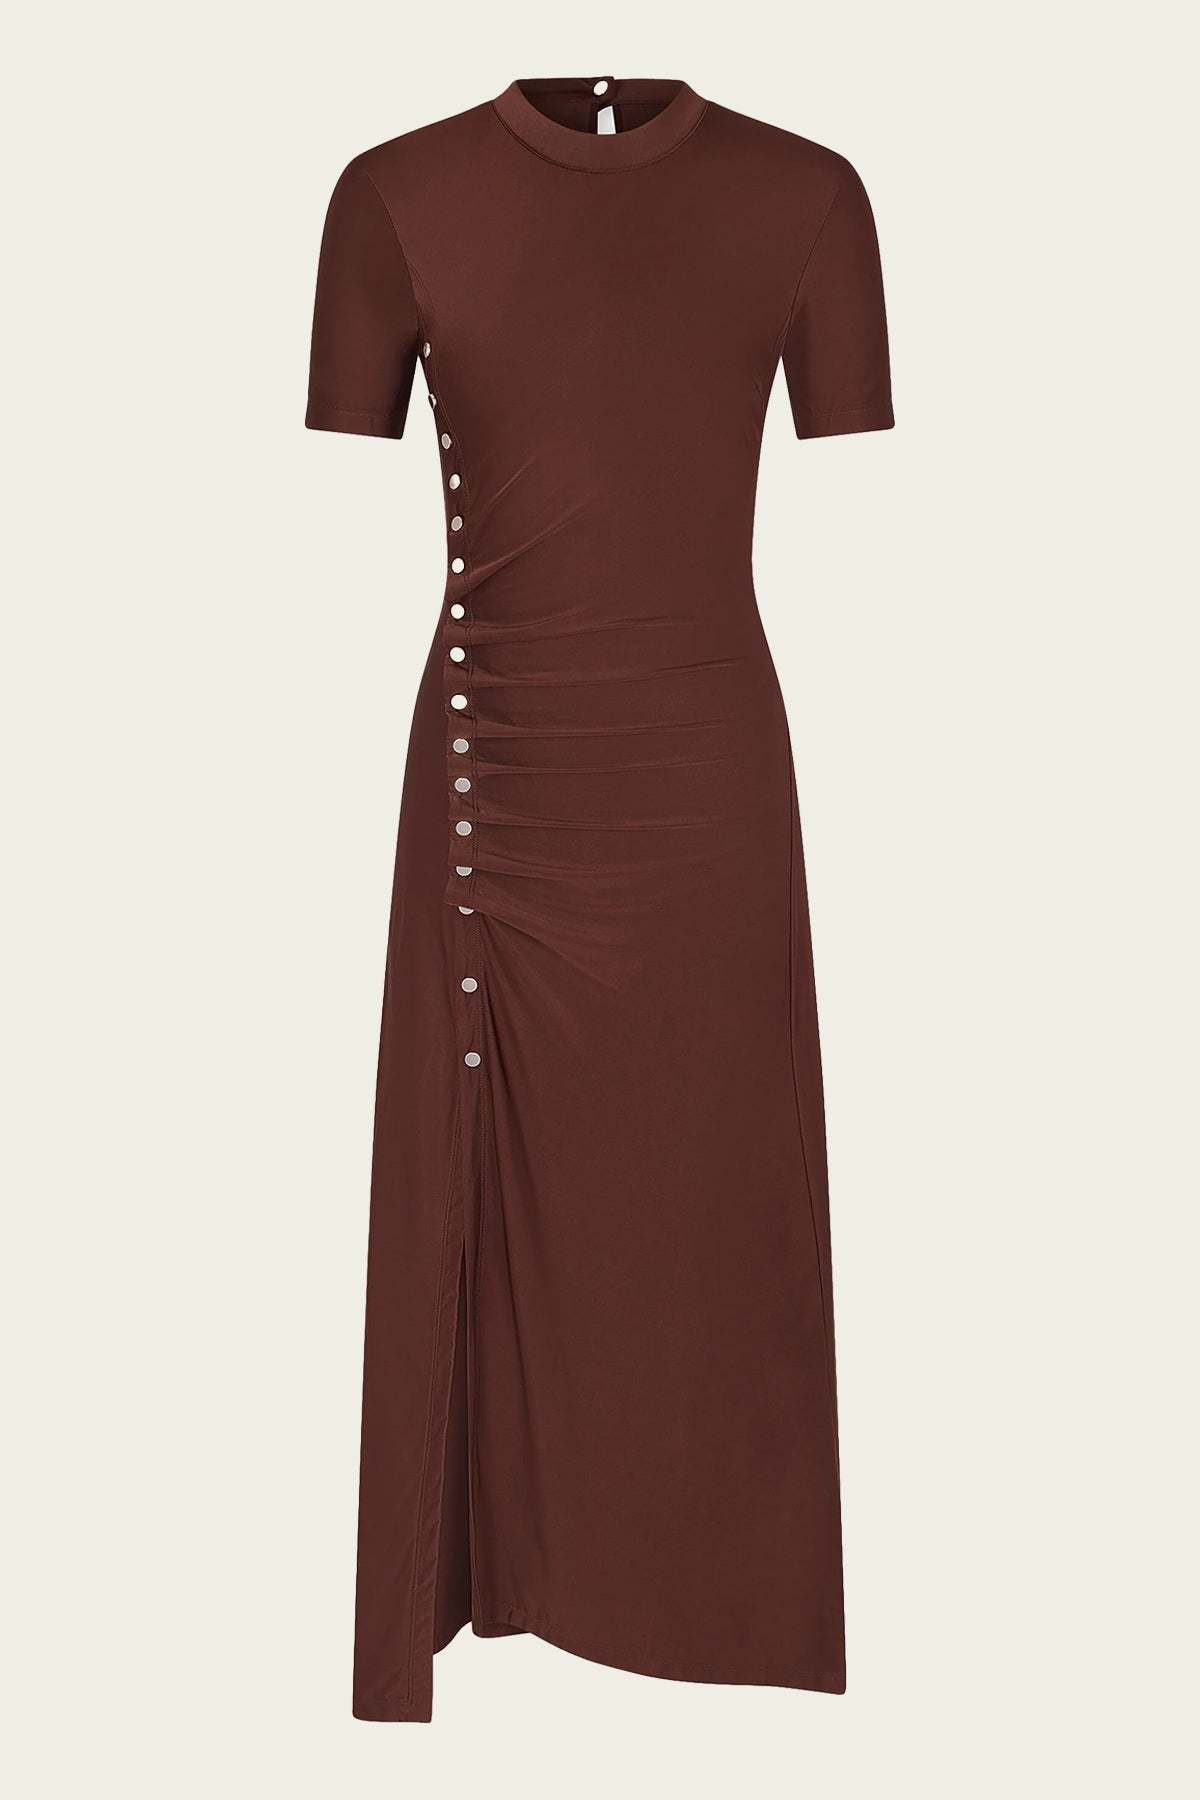 Draped Short-Sleeve Dress in Chocolate - shop-olivia.com